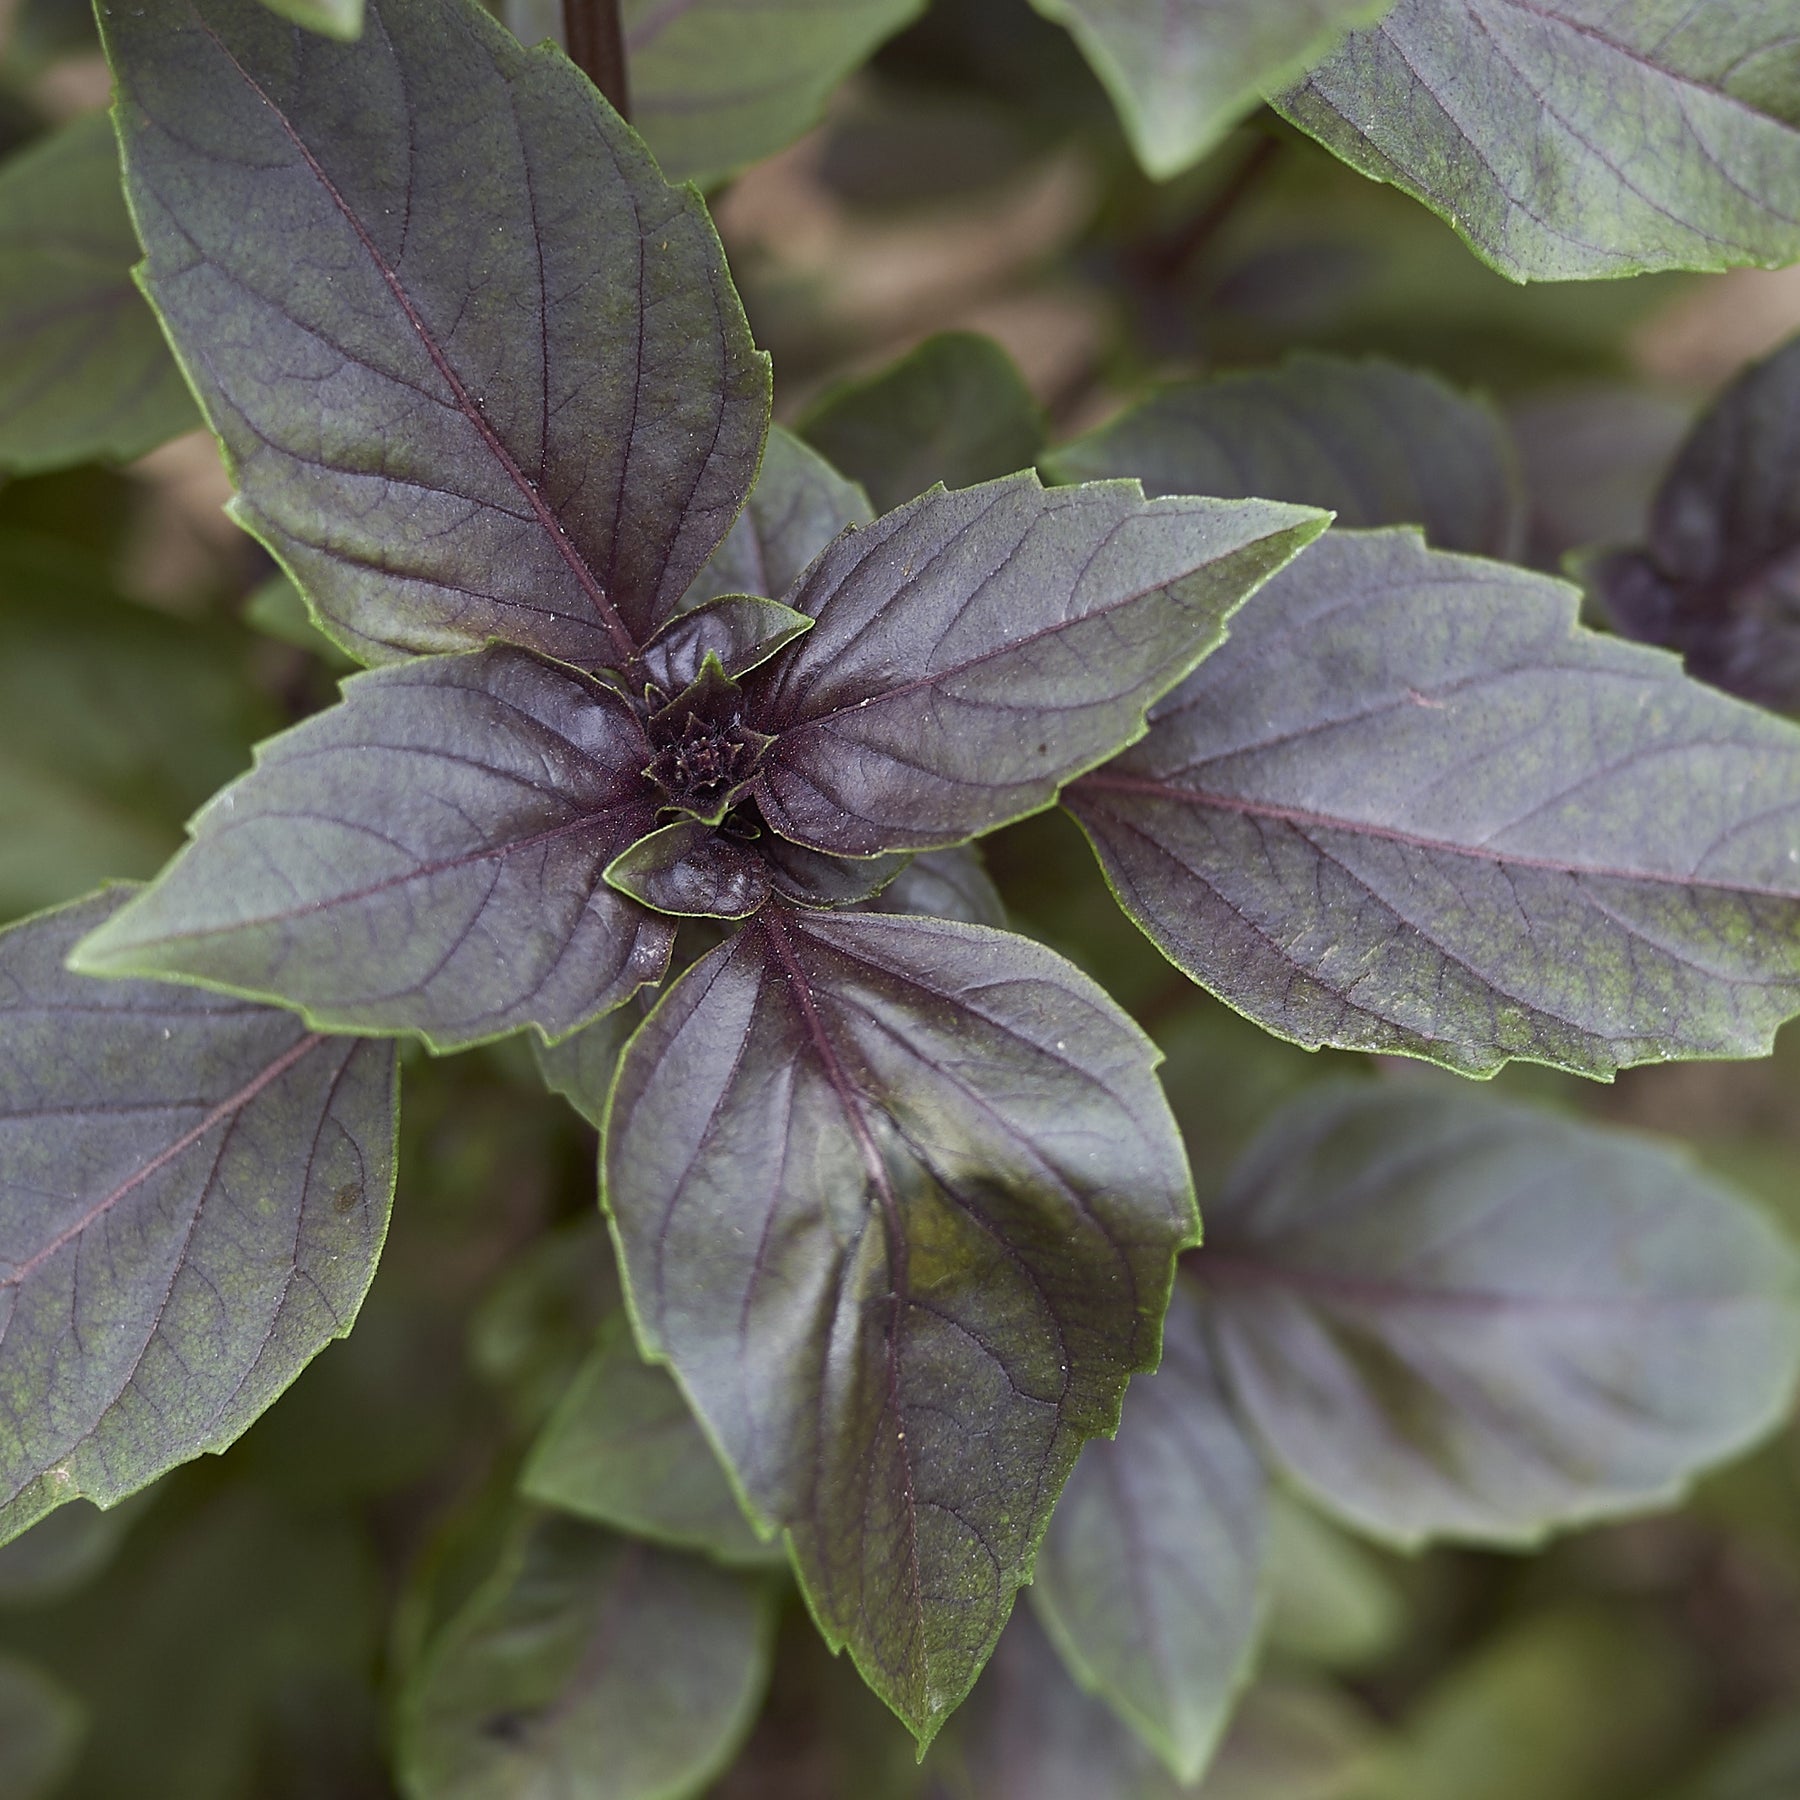 Plant de Basilic pourpre - Ocimum basilicum purpurascens - Potager